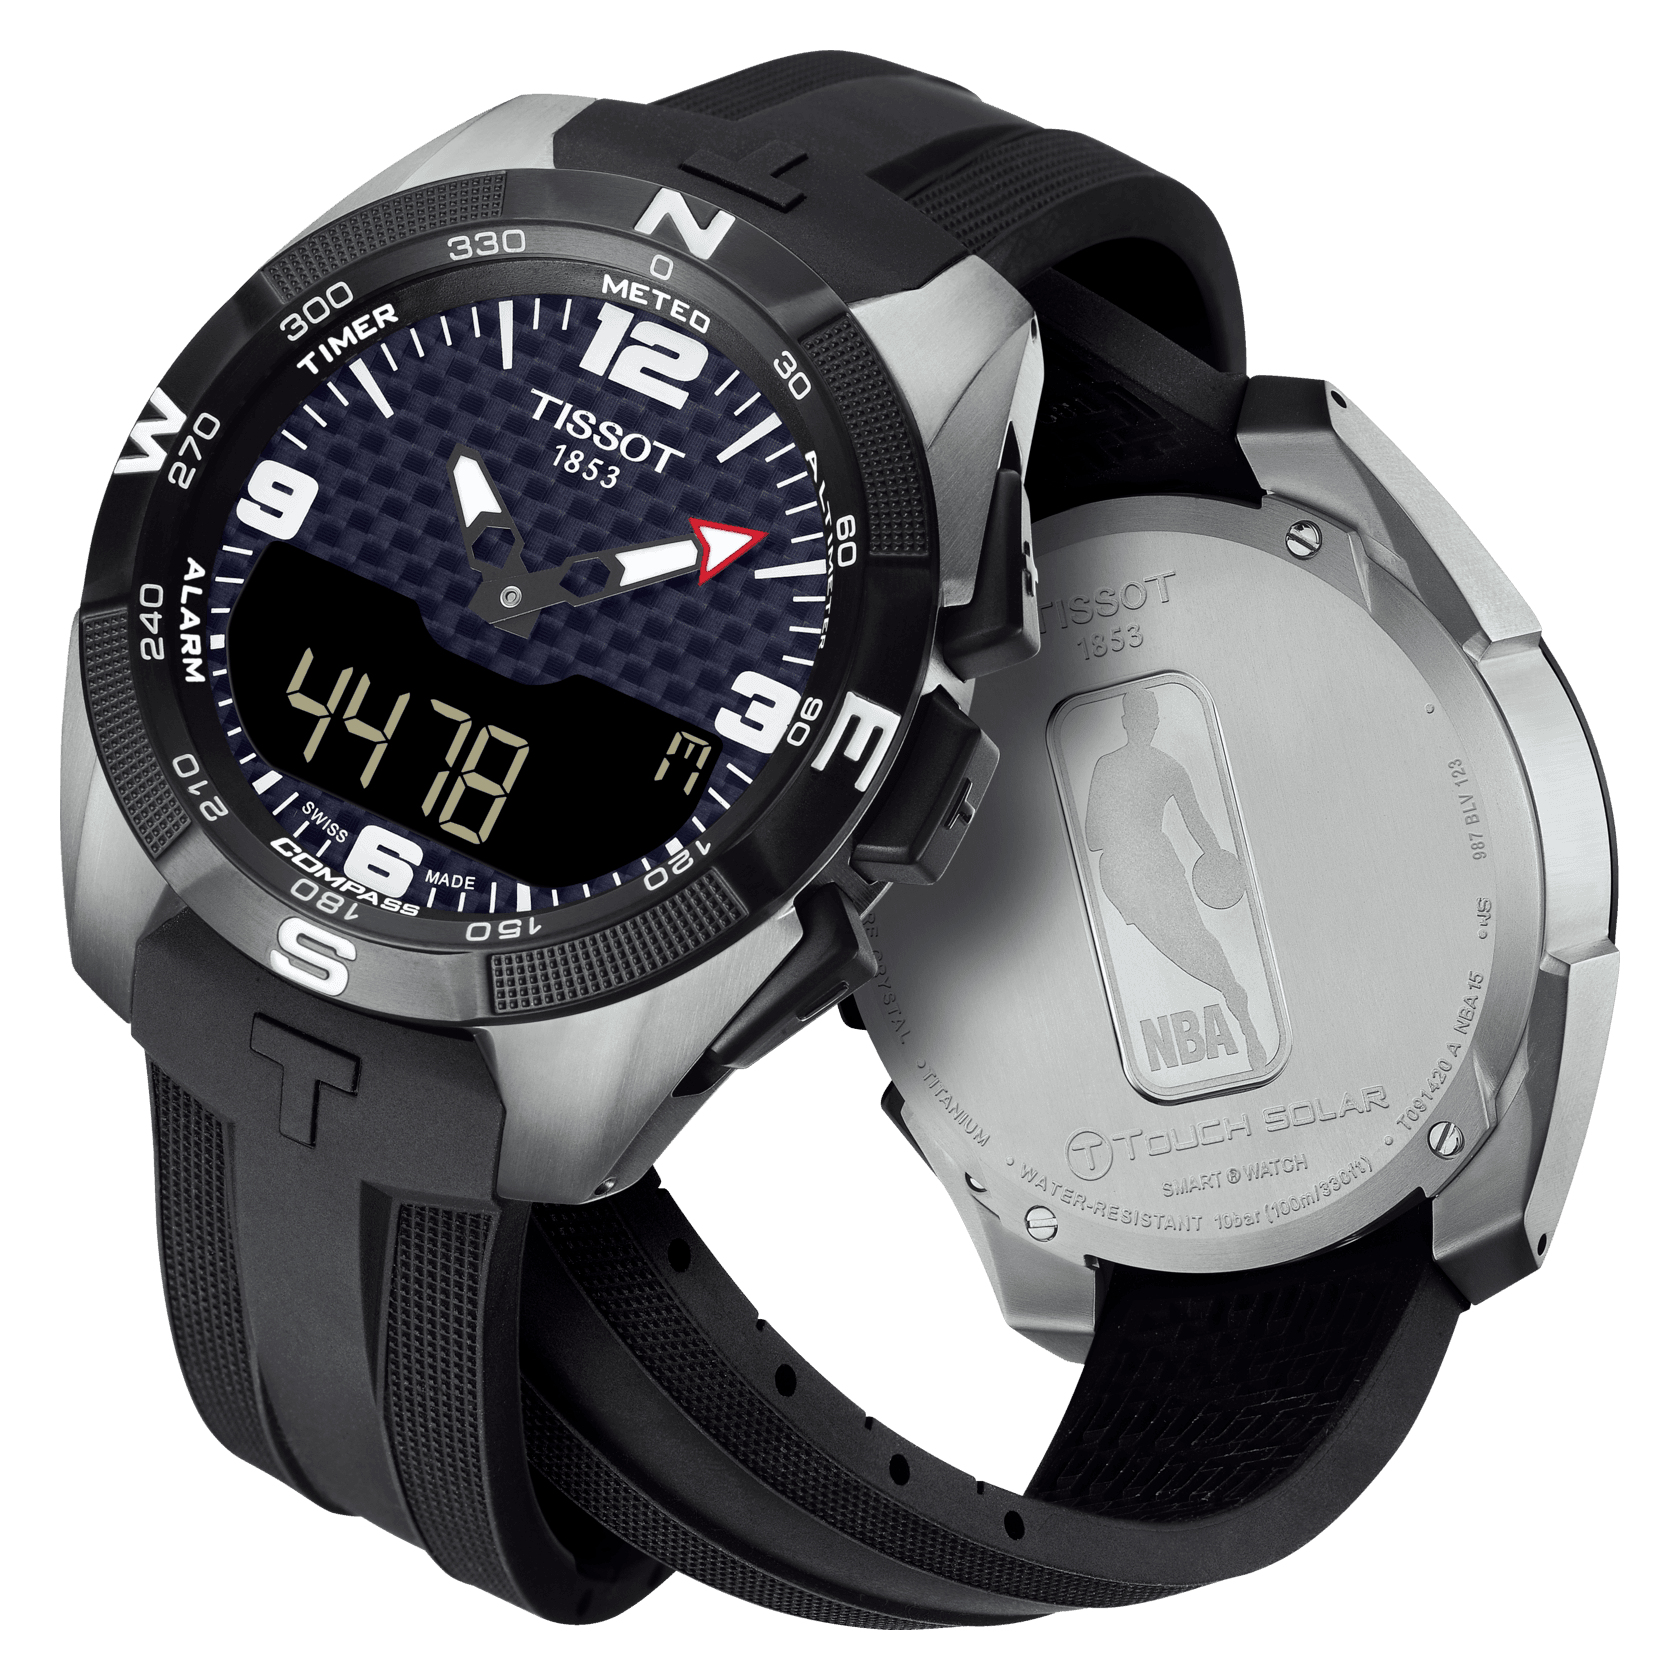 Replica Breitling Watch Parts